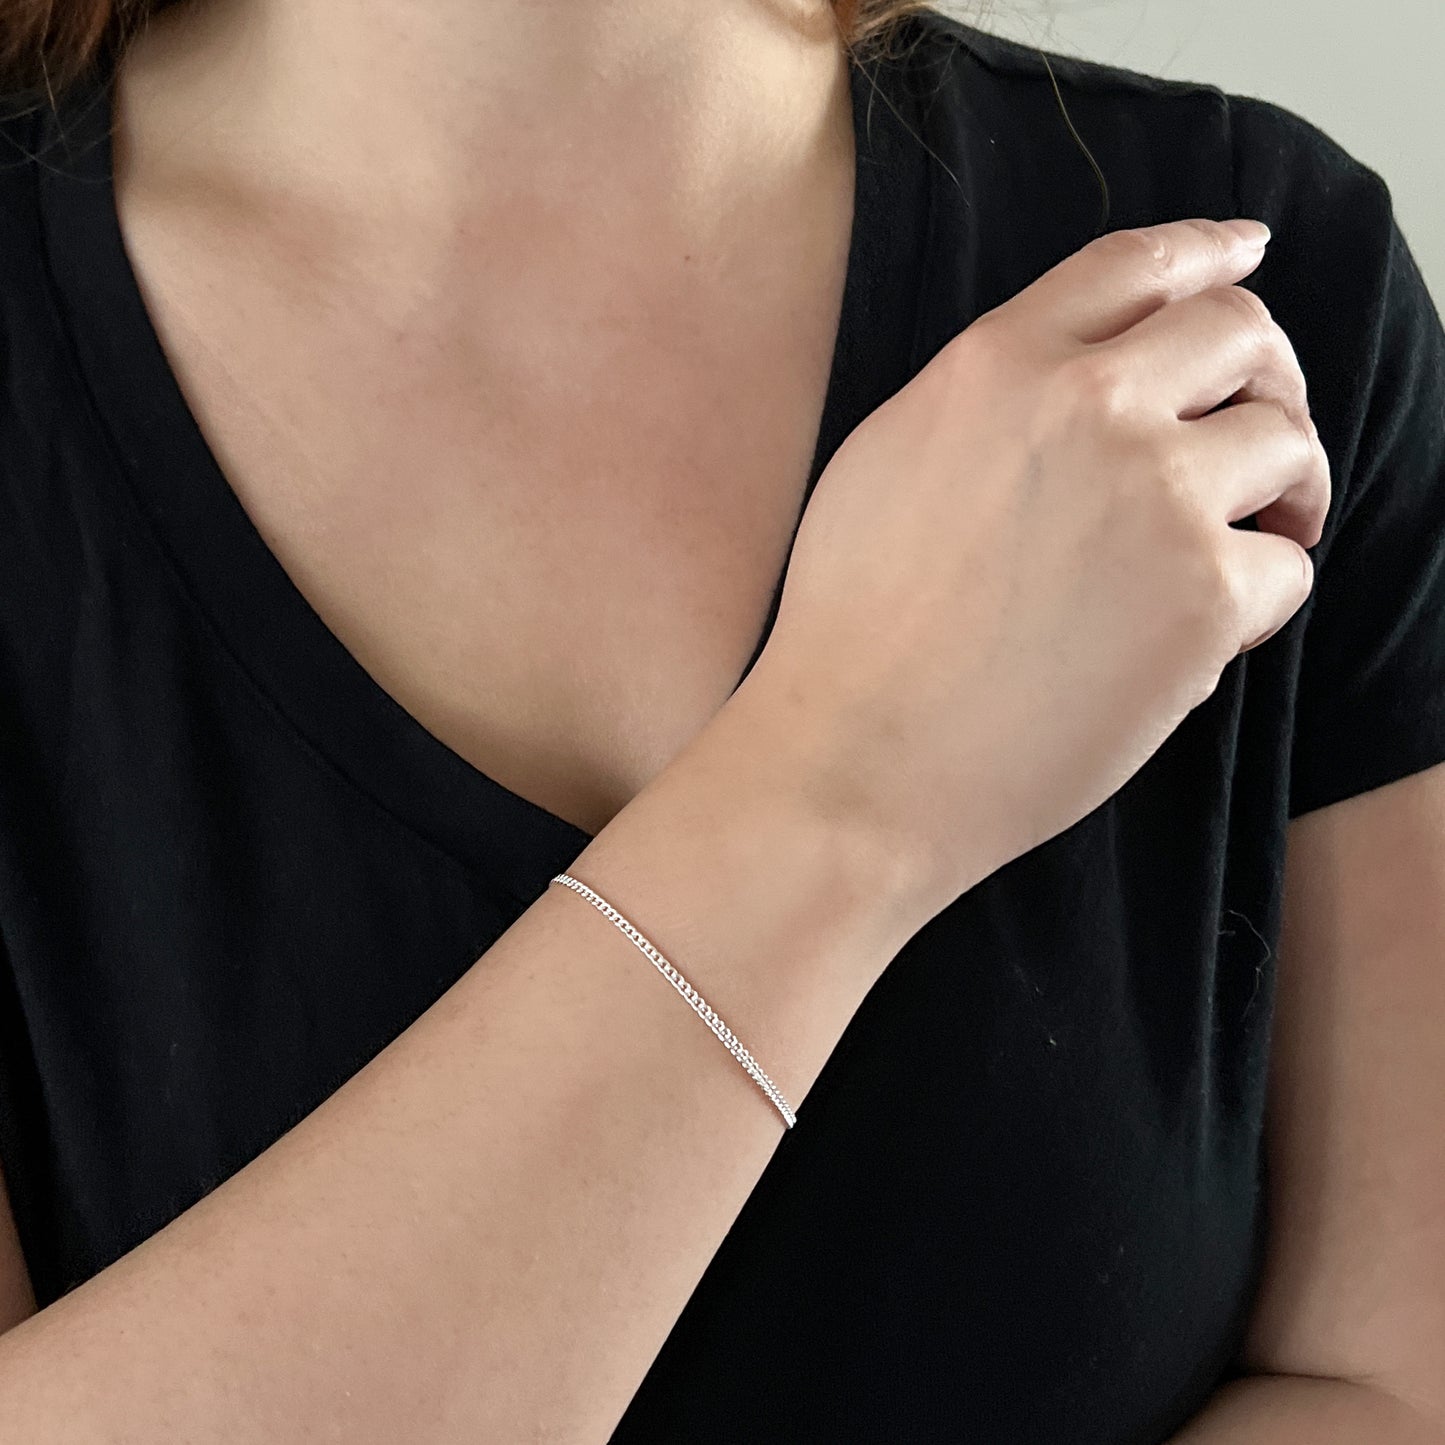 Sterling Silver Bracelets for Women - Curb Chain Bracelet - Adjustable